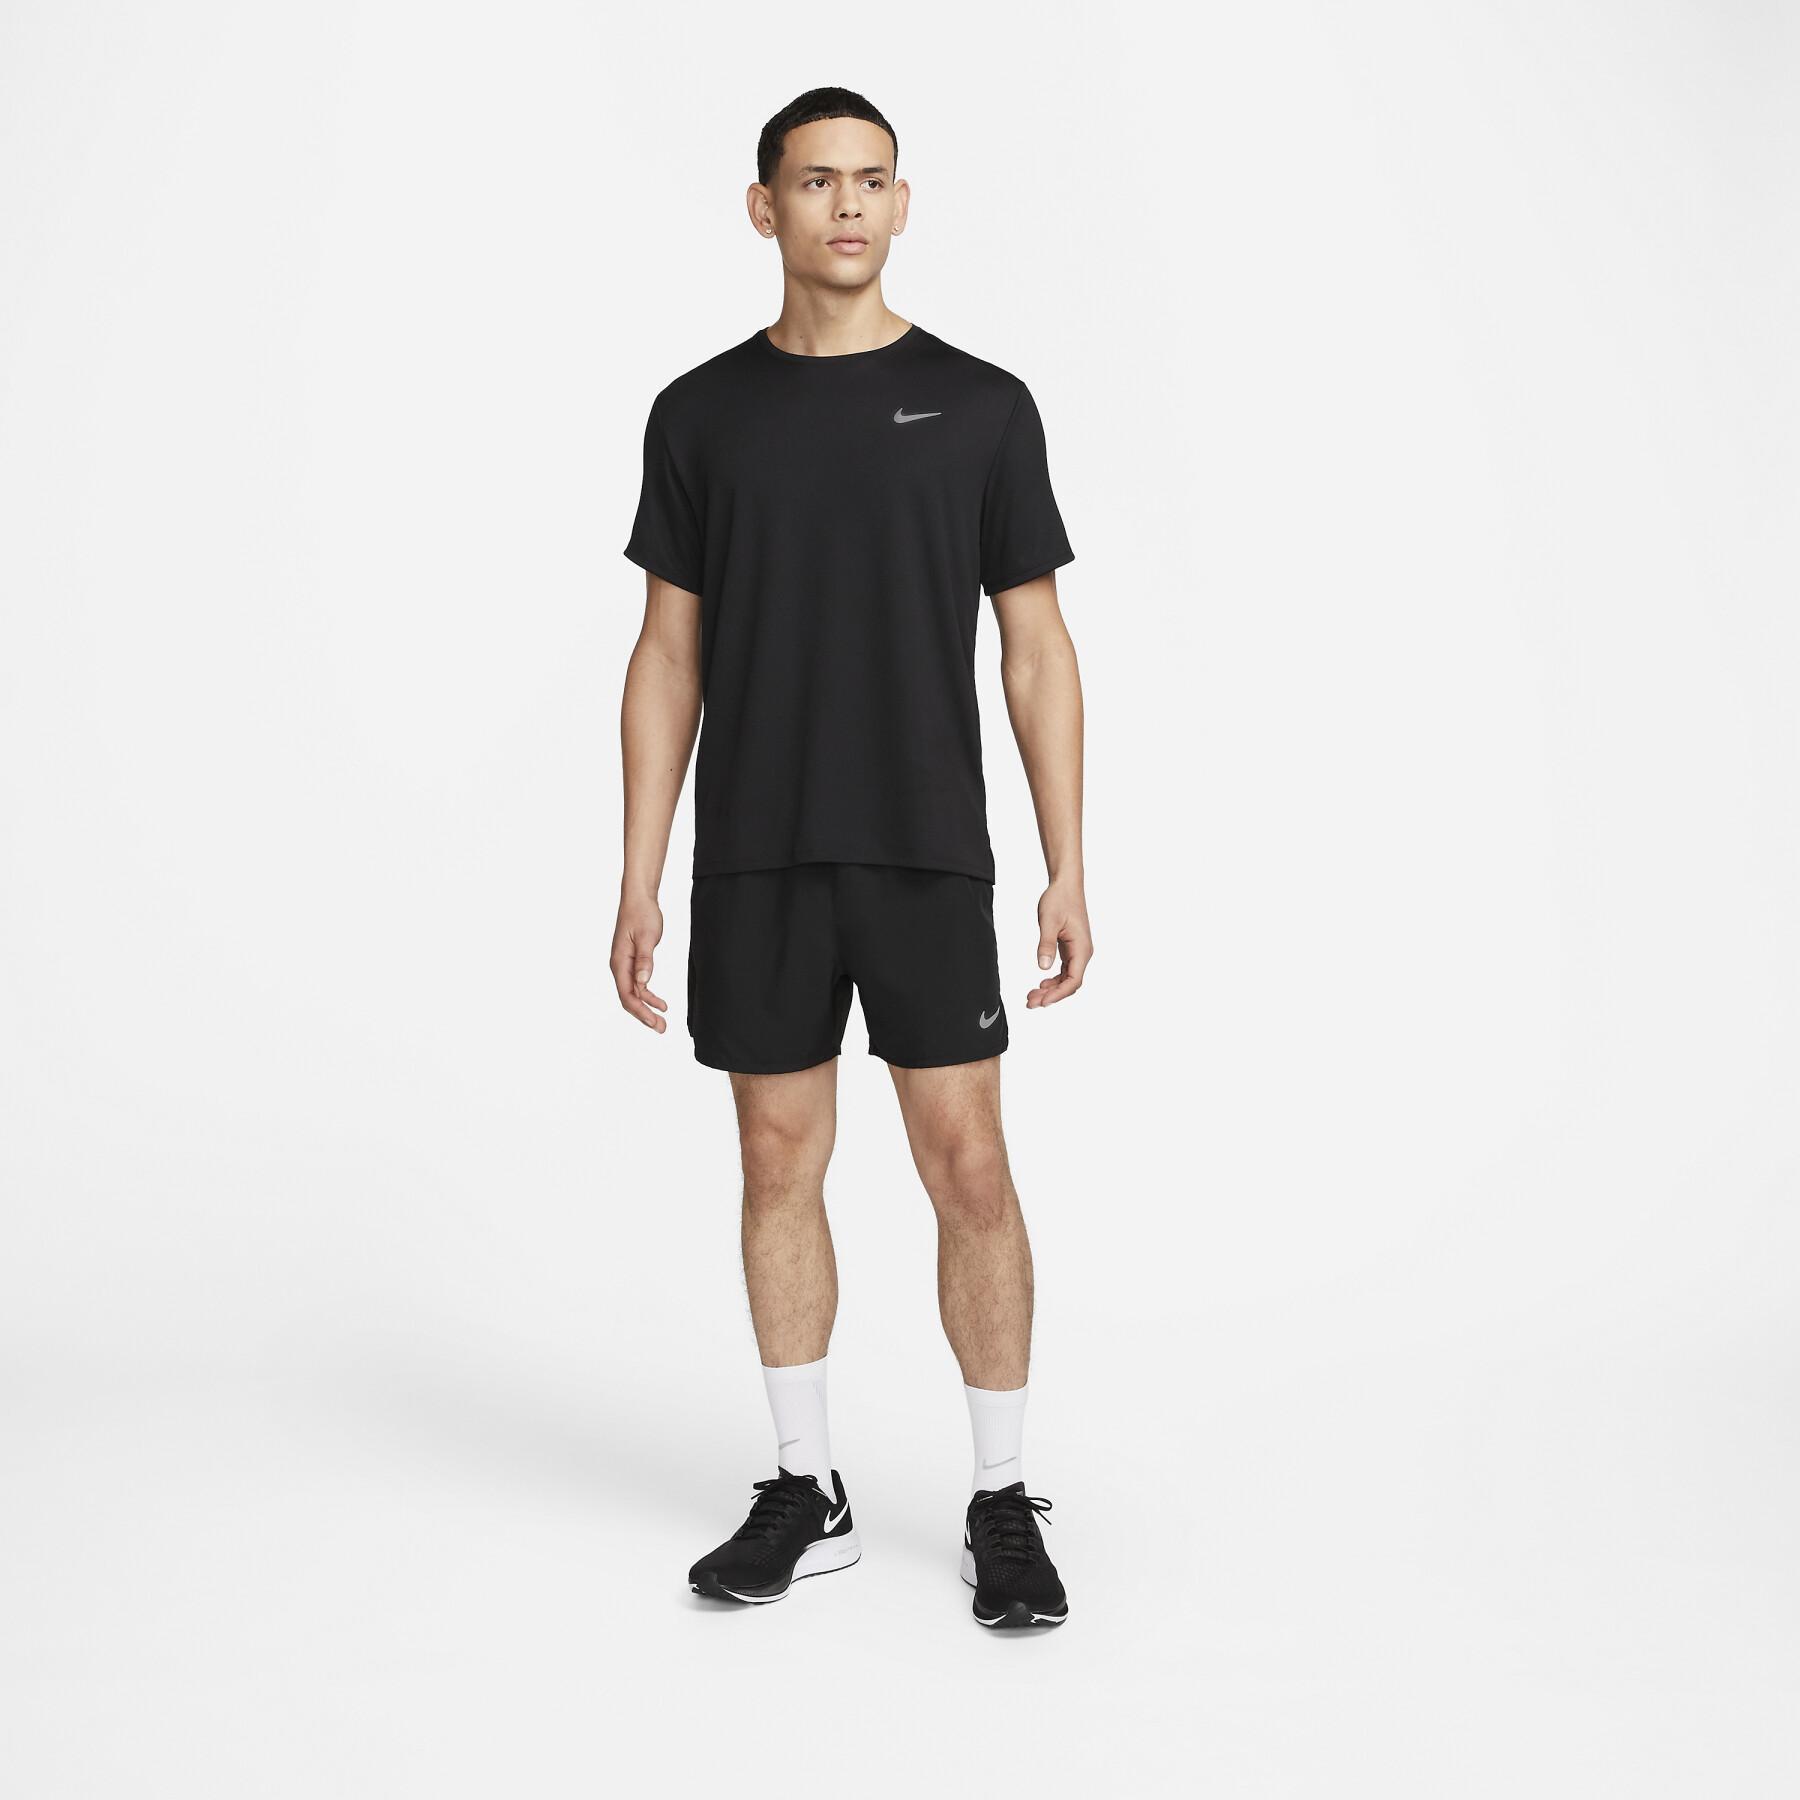 Jersey Nike Dri-FIT UV Miler